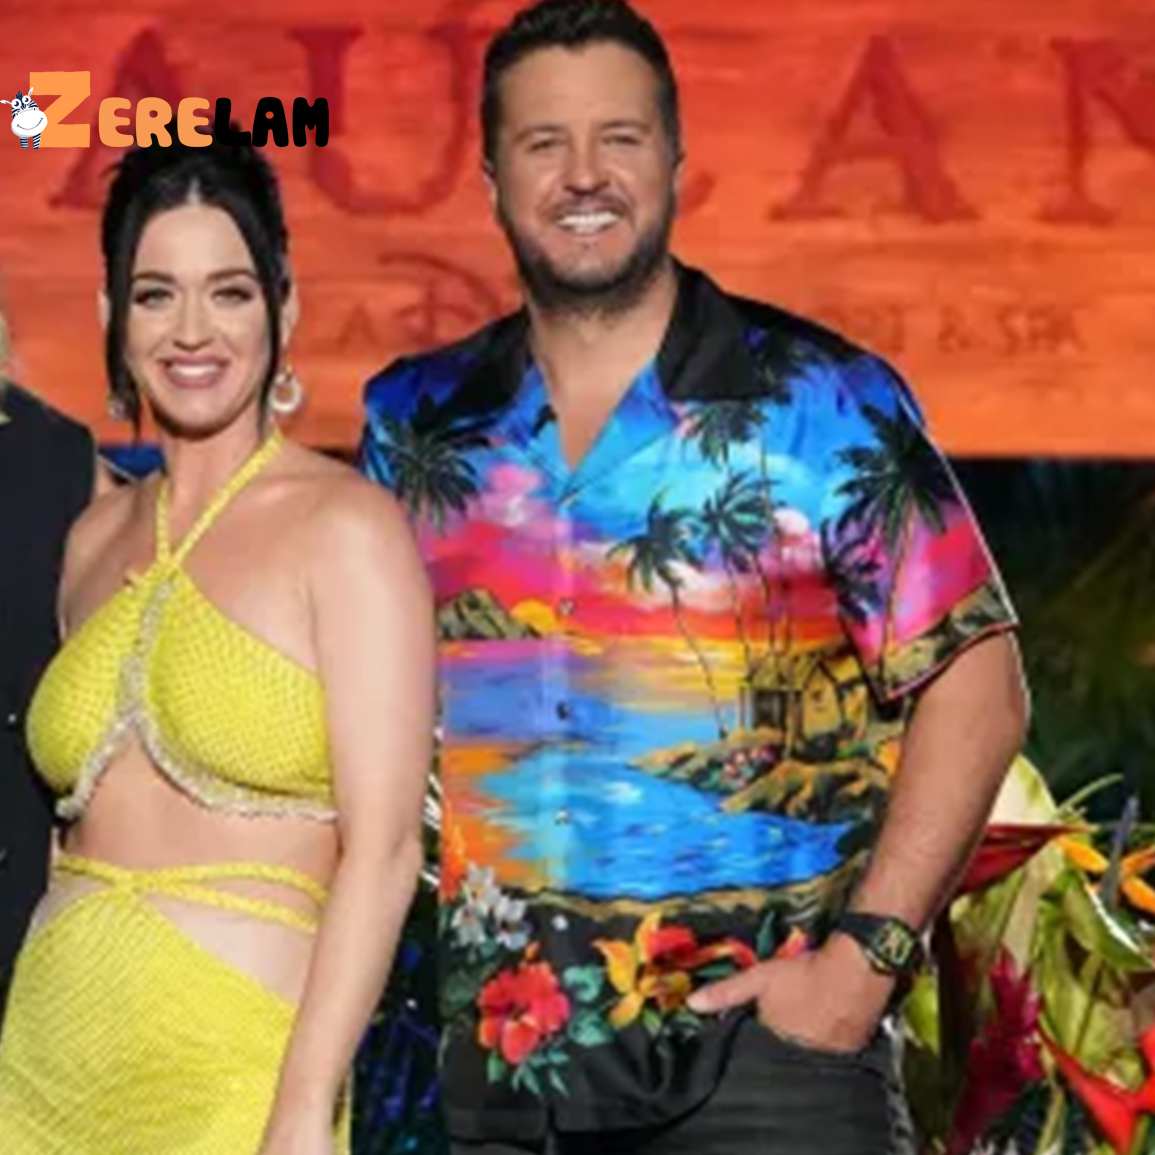 Eletees Luke Bryan Aloha Orange Sunset Hawaiian Shirt American Idol